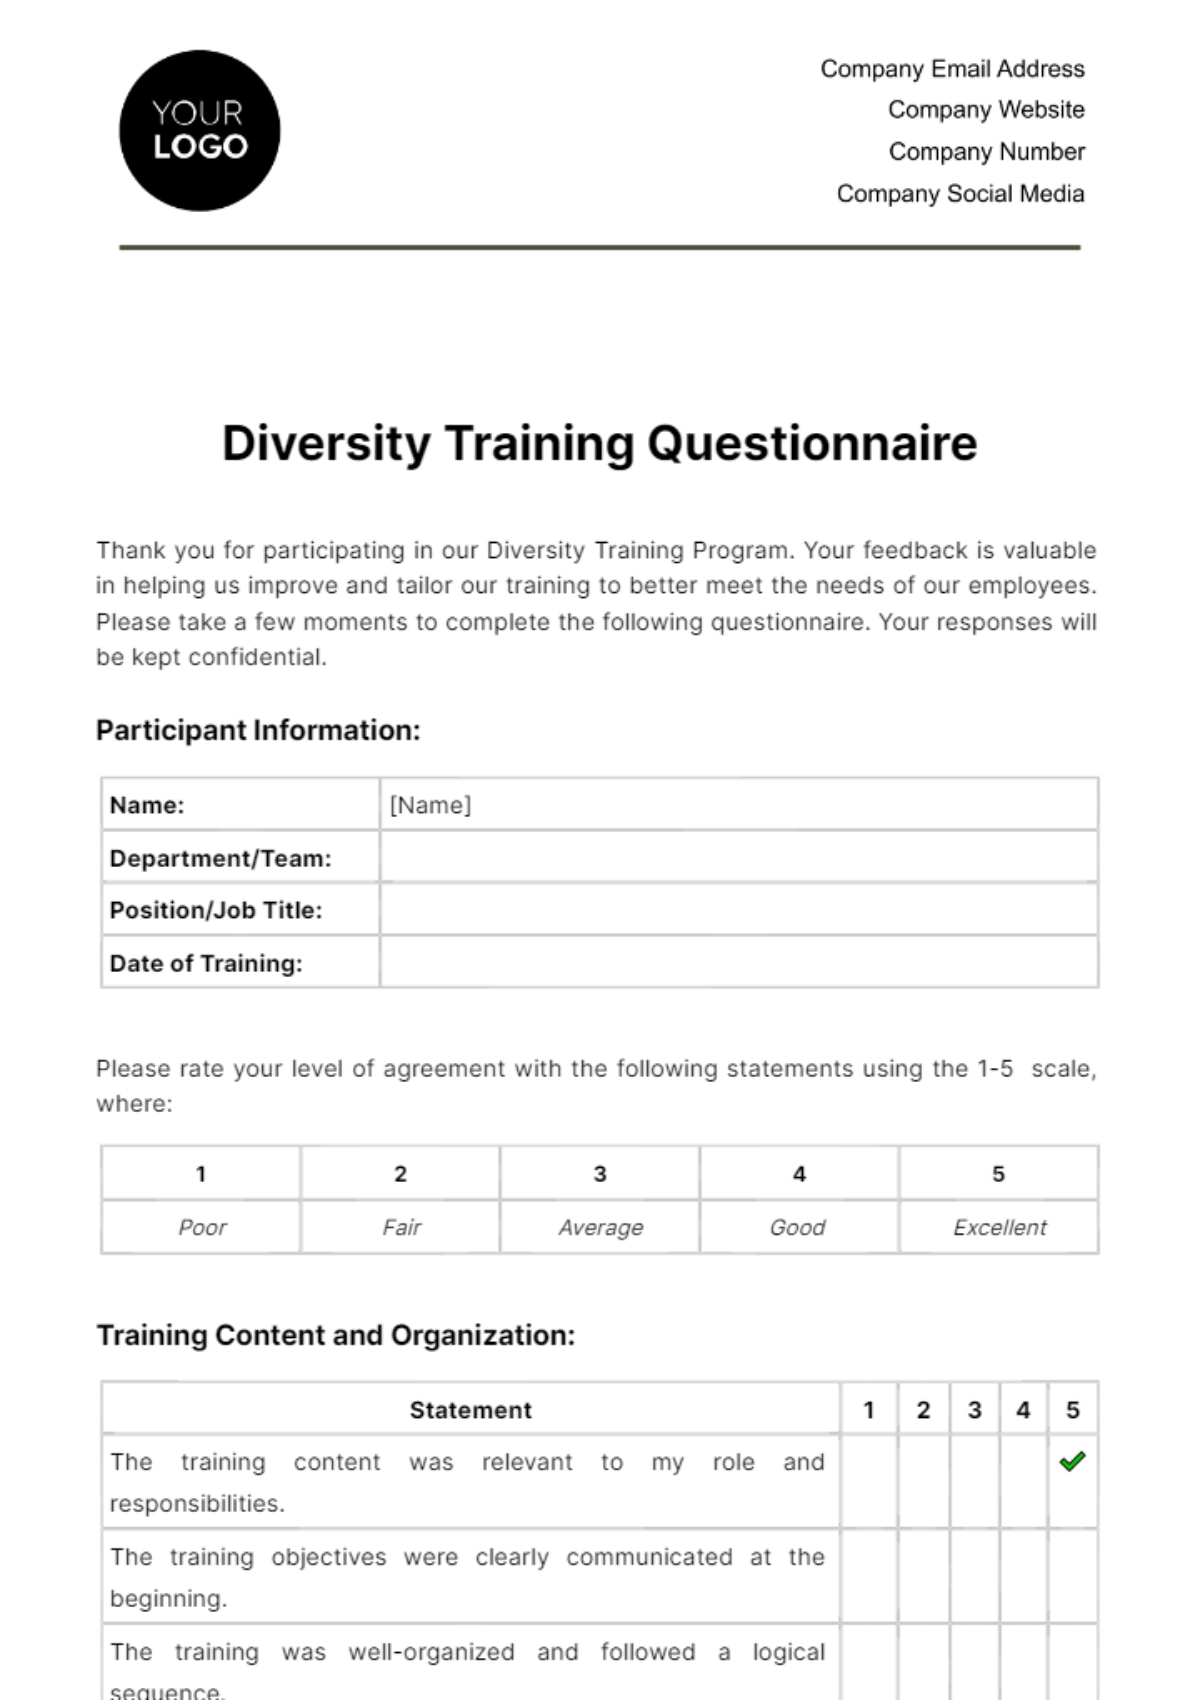 Free Diversity Training Questionnaire HR Template